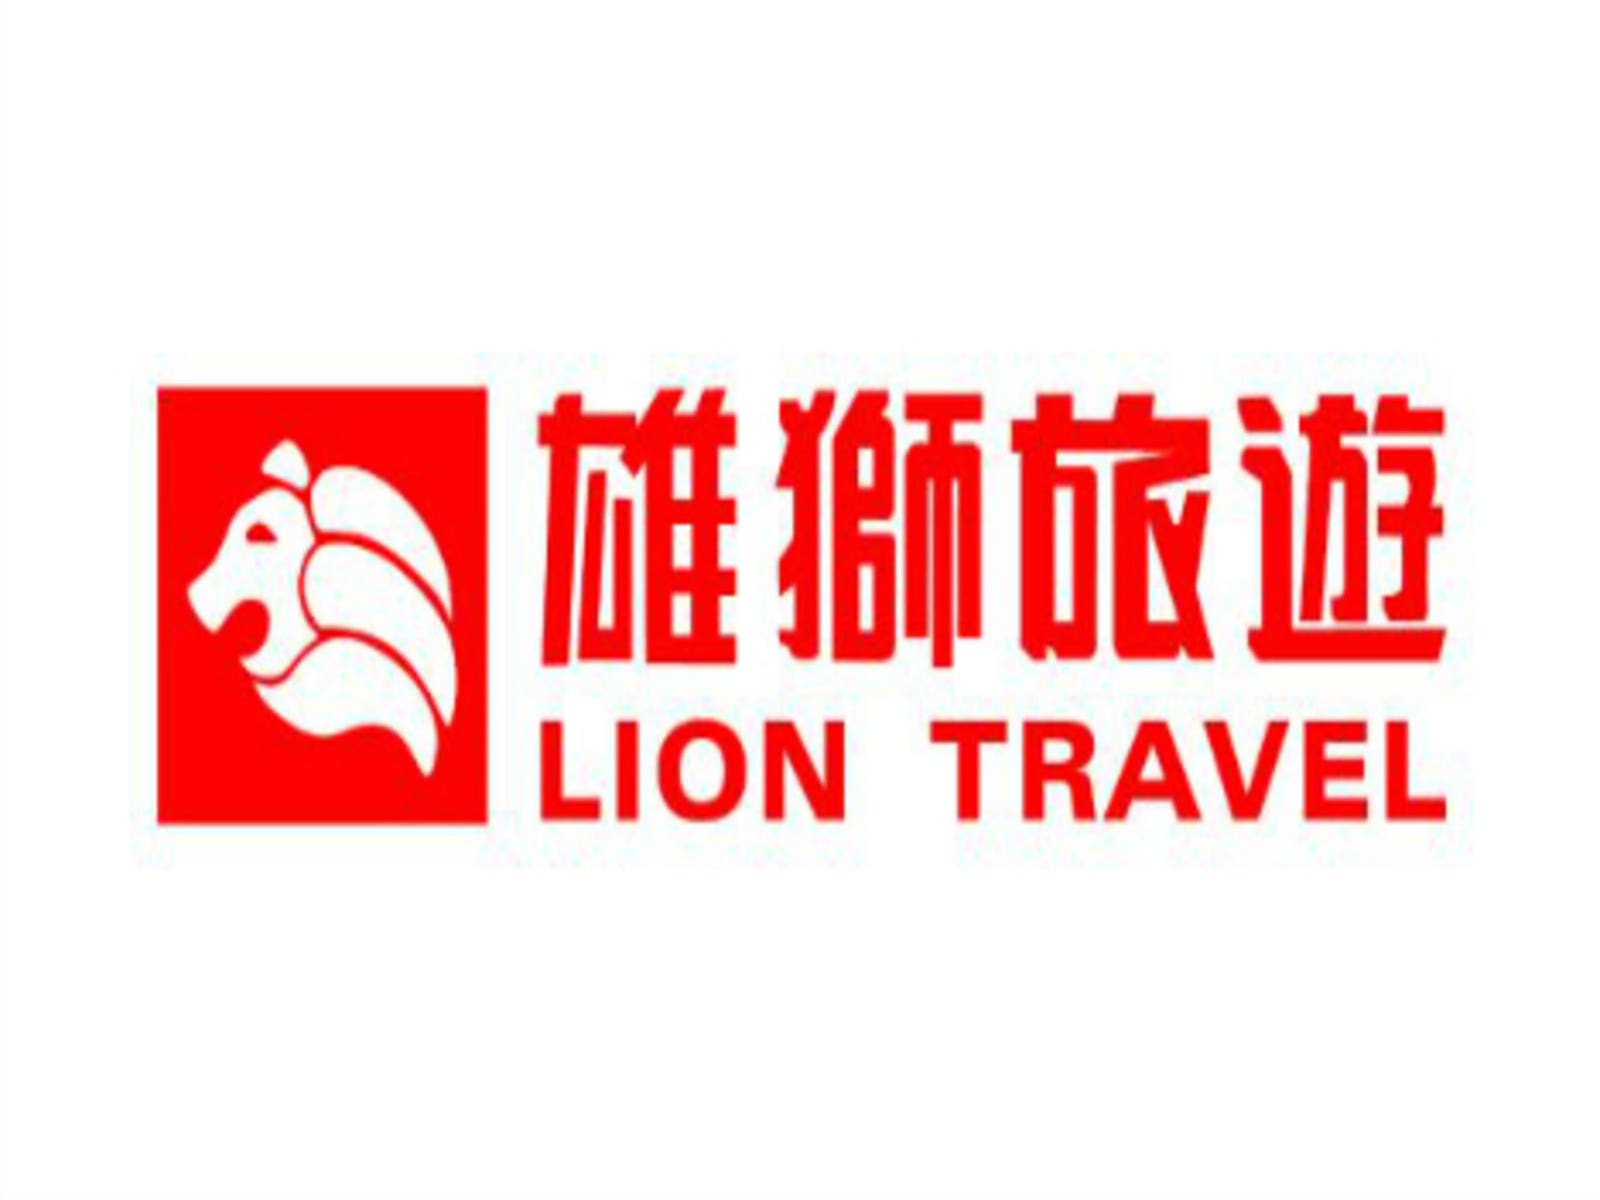 lion travel agent